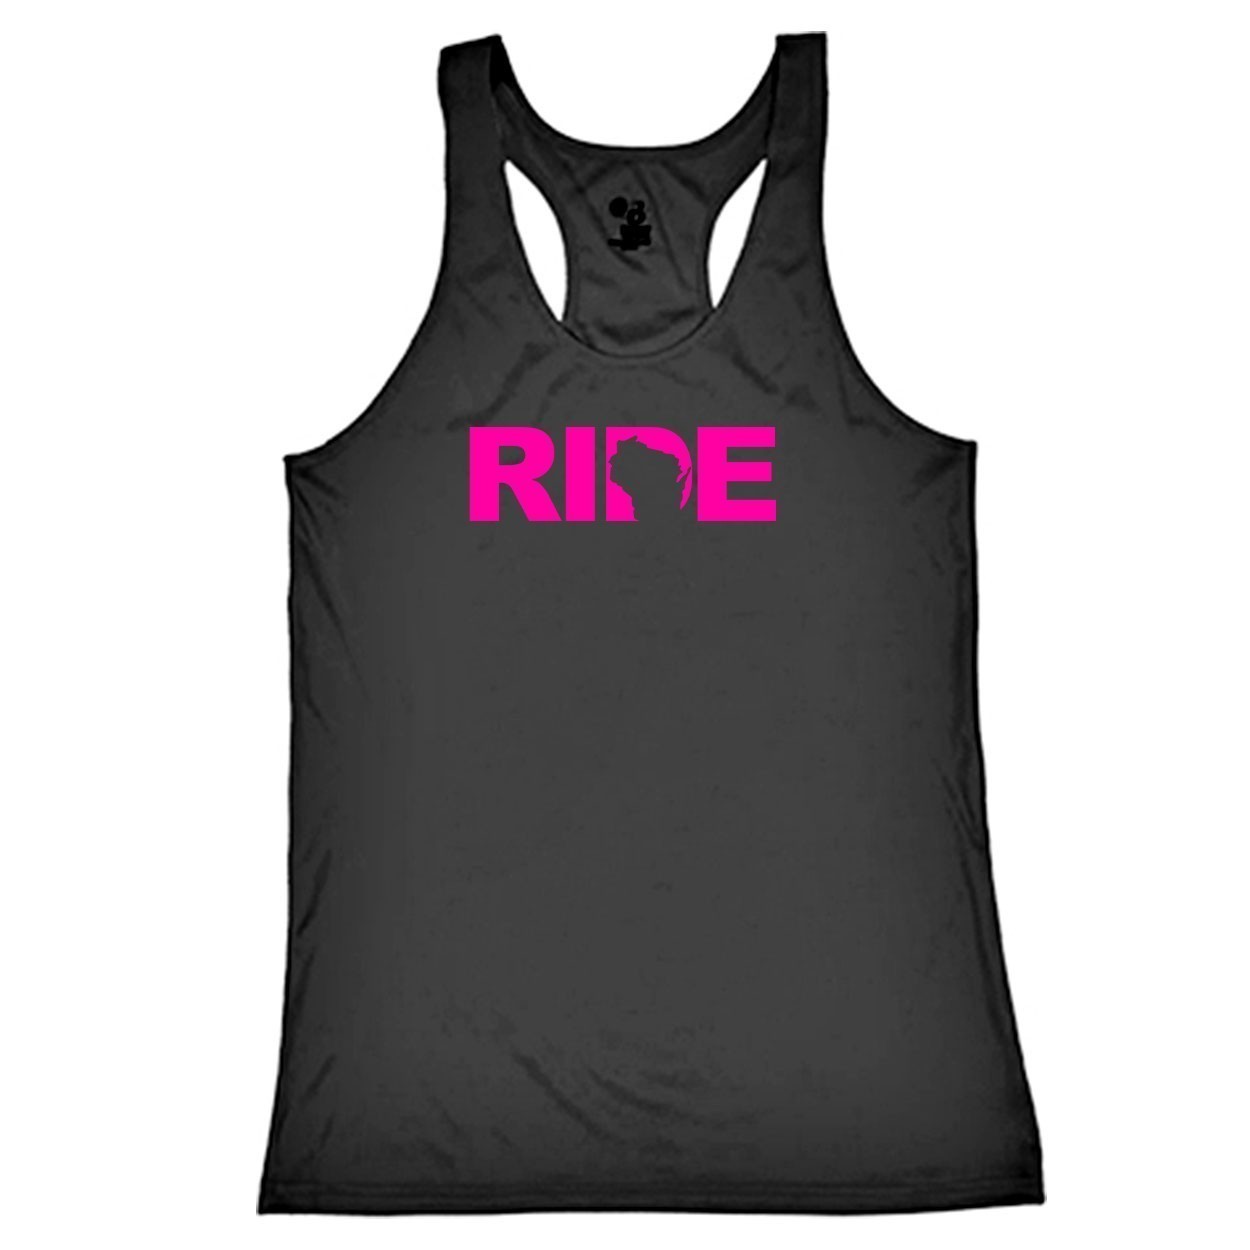 Ride Wisconsin Classic Youth Girls Performance Racerback Tank Top Black (Pink Logo)